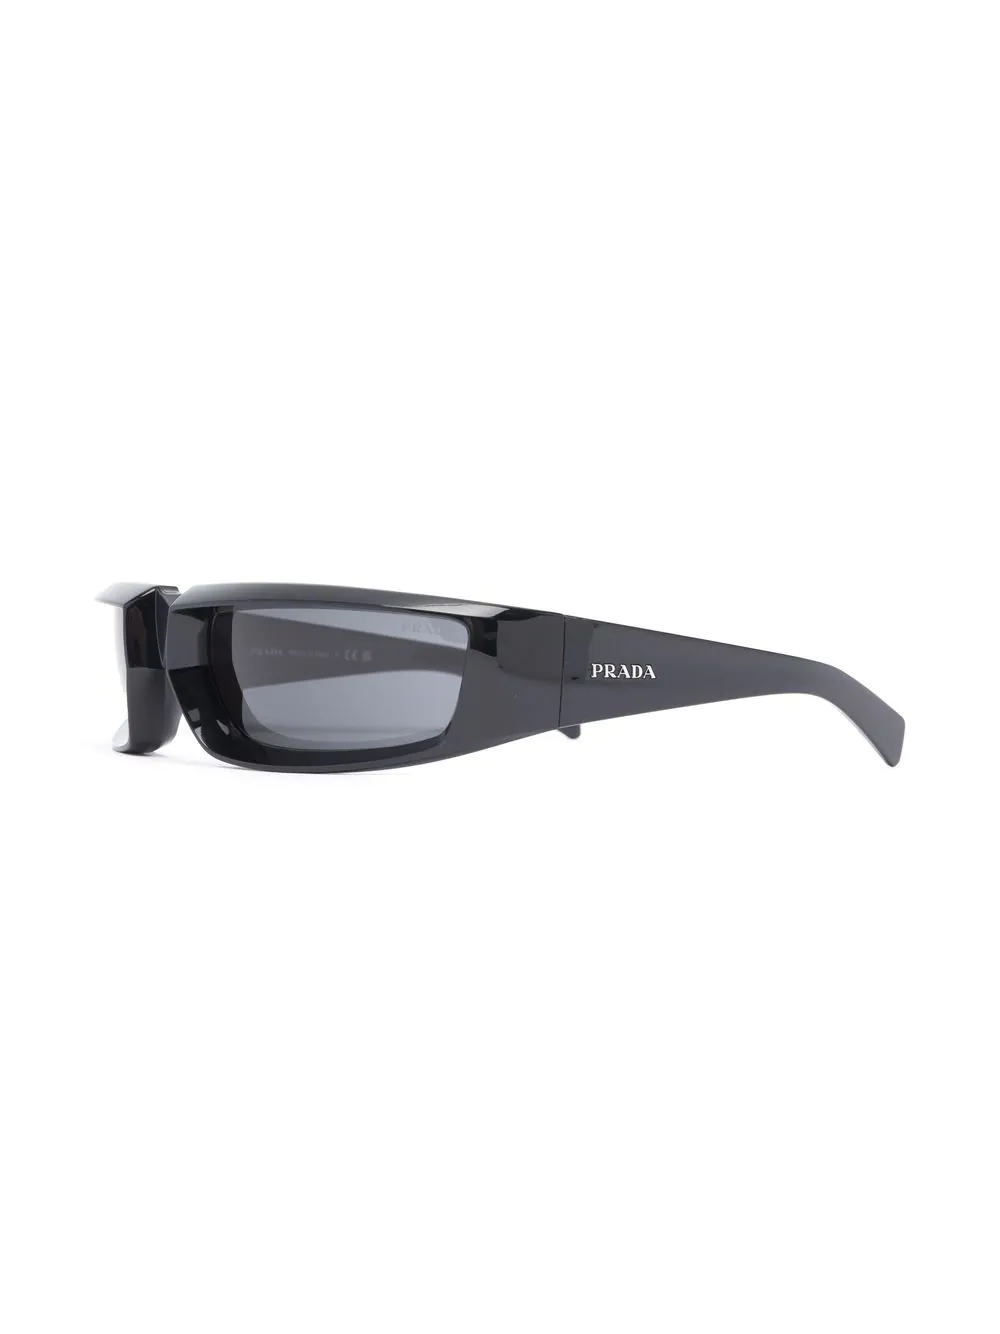 Square Tinted Sunglasses from Prada